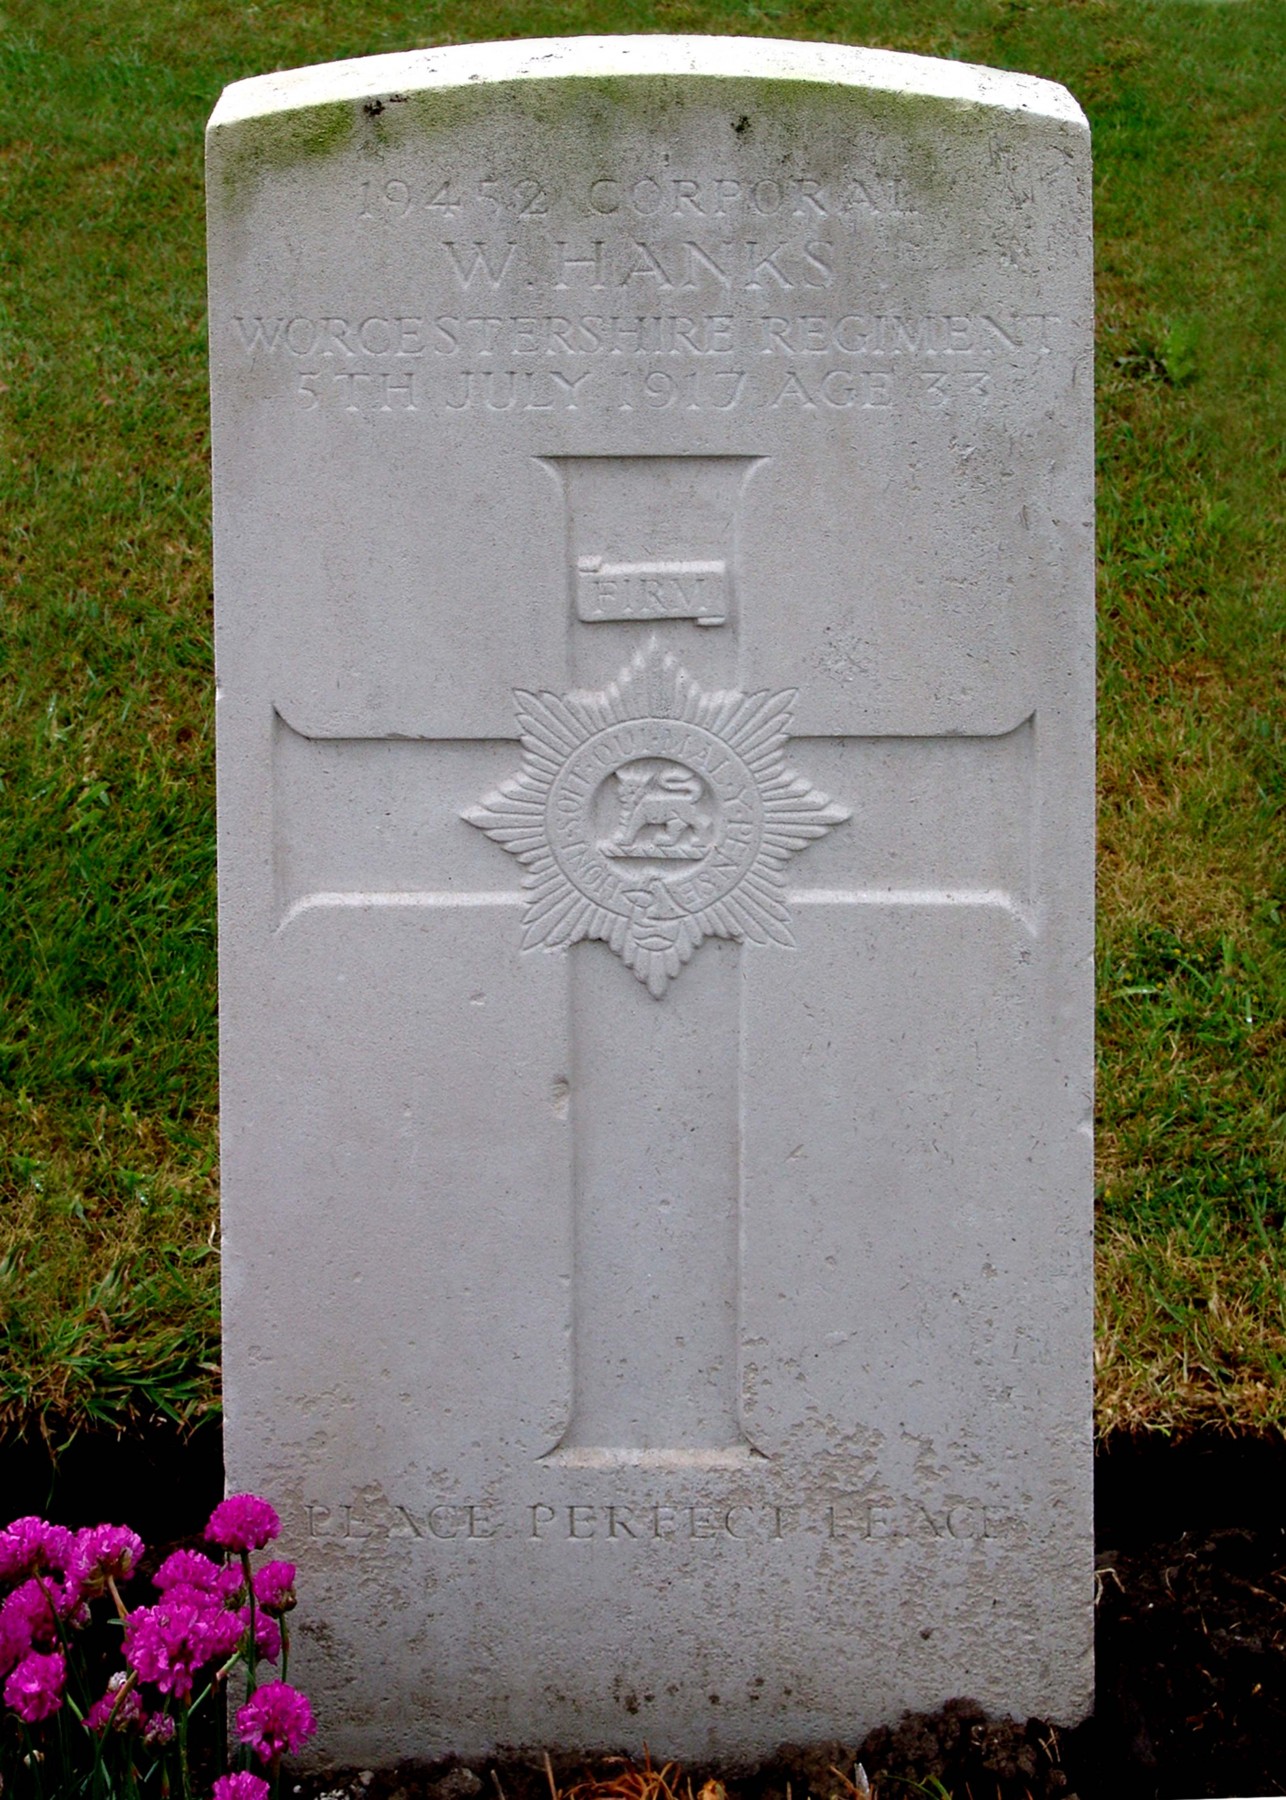 Grave of Corporal William Hanks